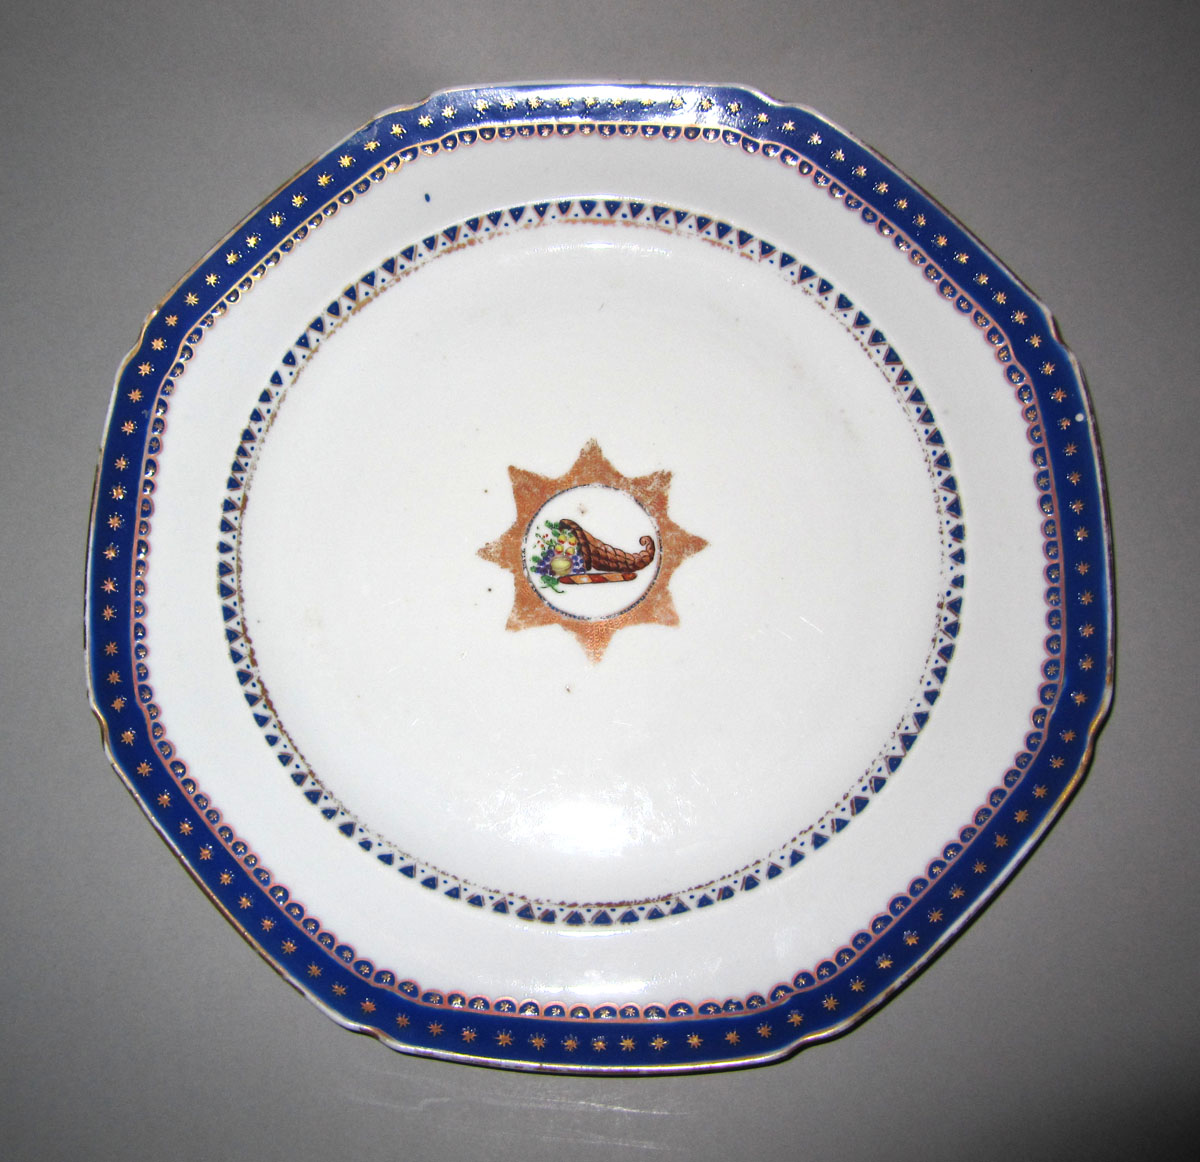 1965.0718.013 Porcelain plate